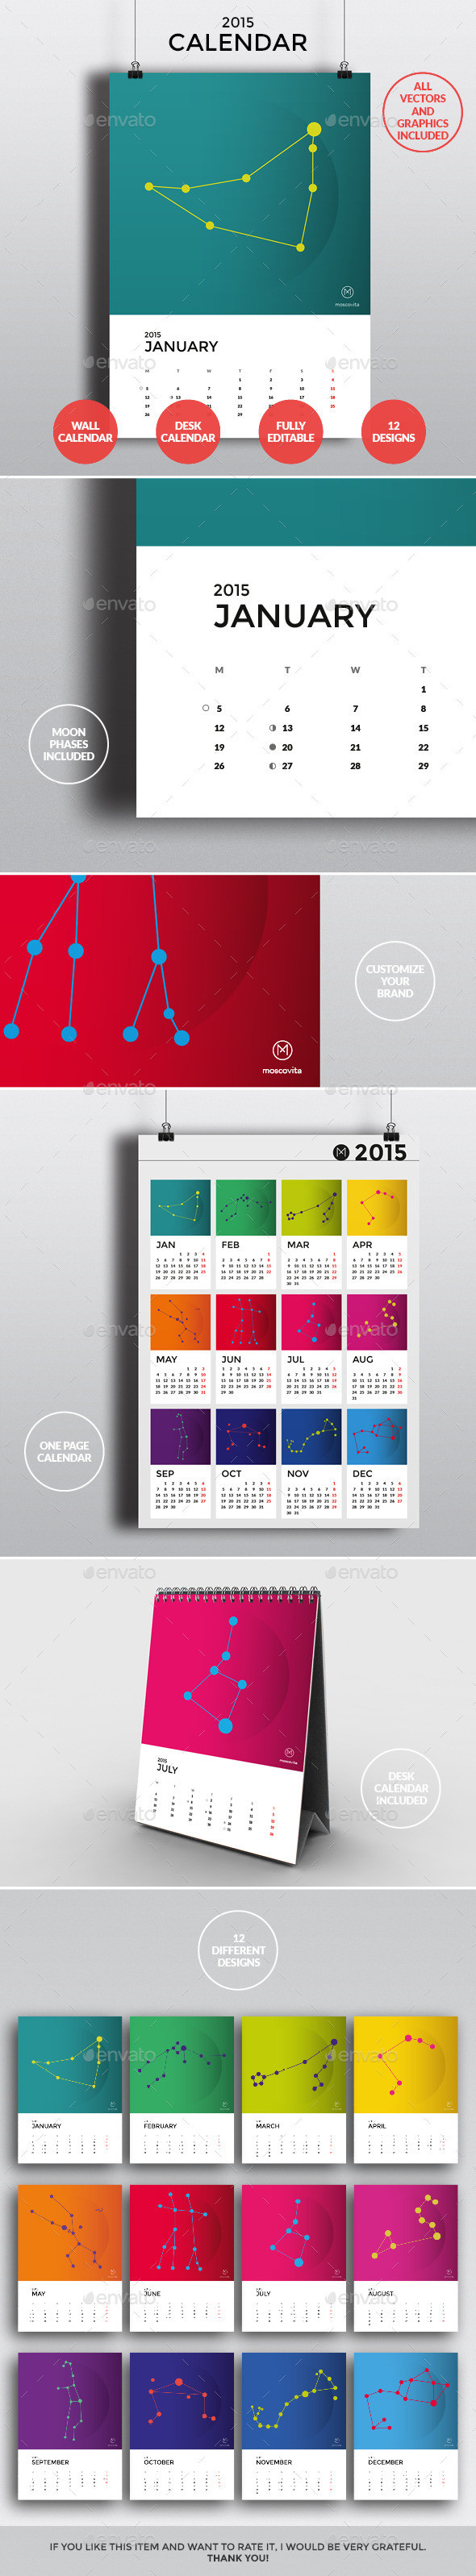 Calendar moscovita preview